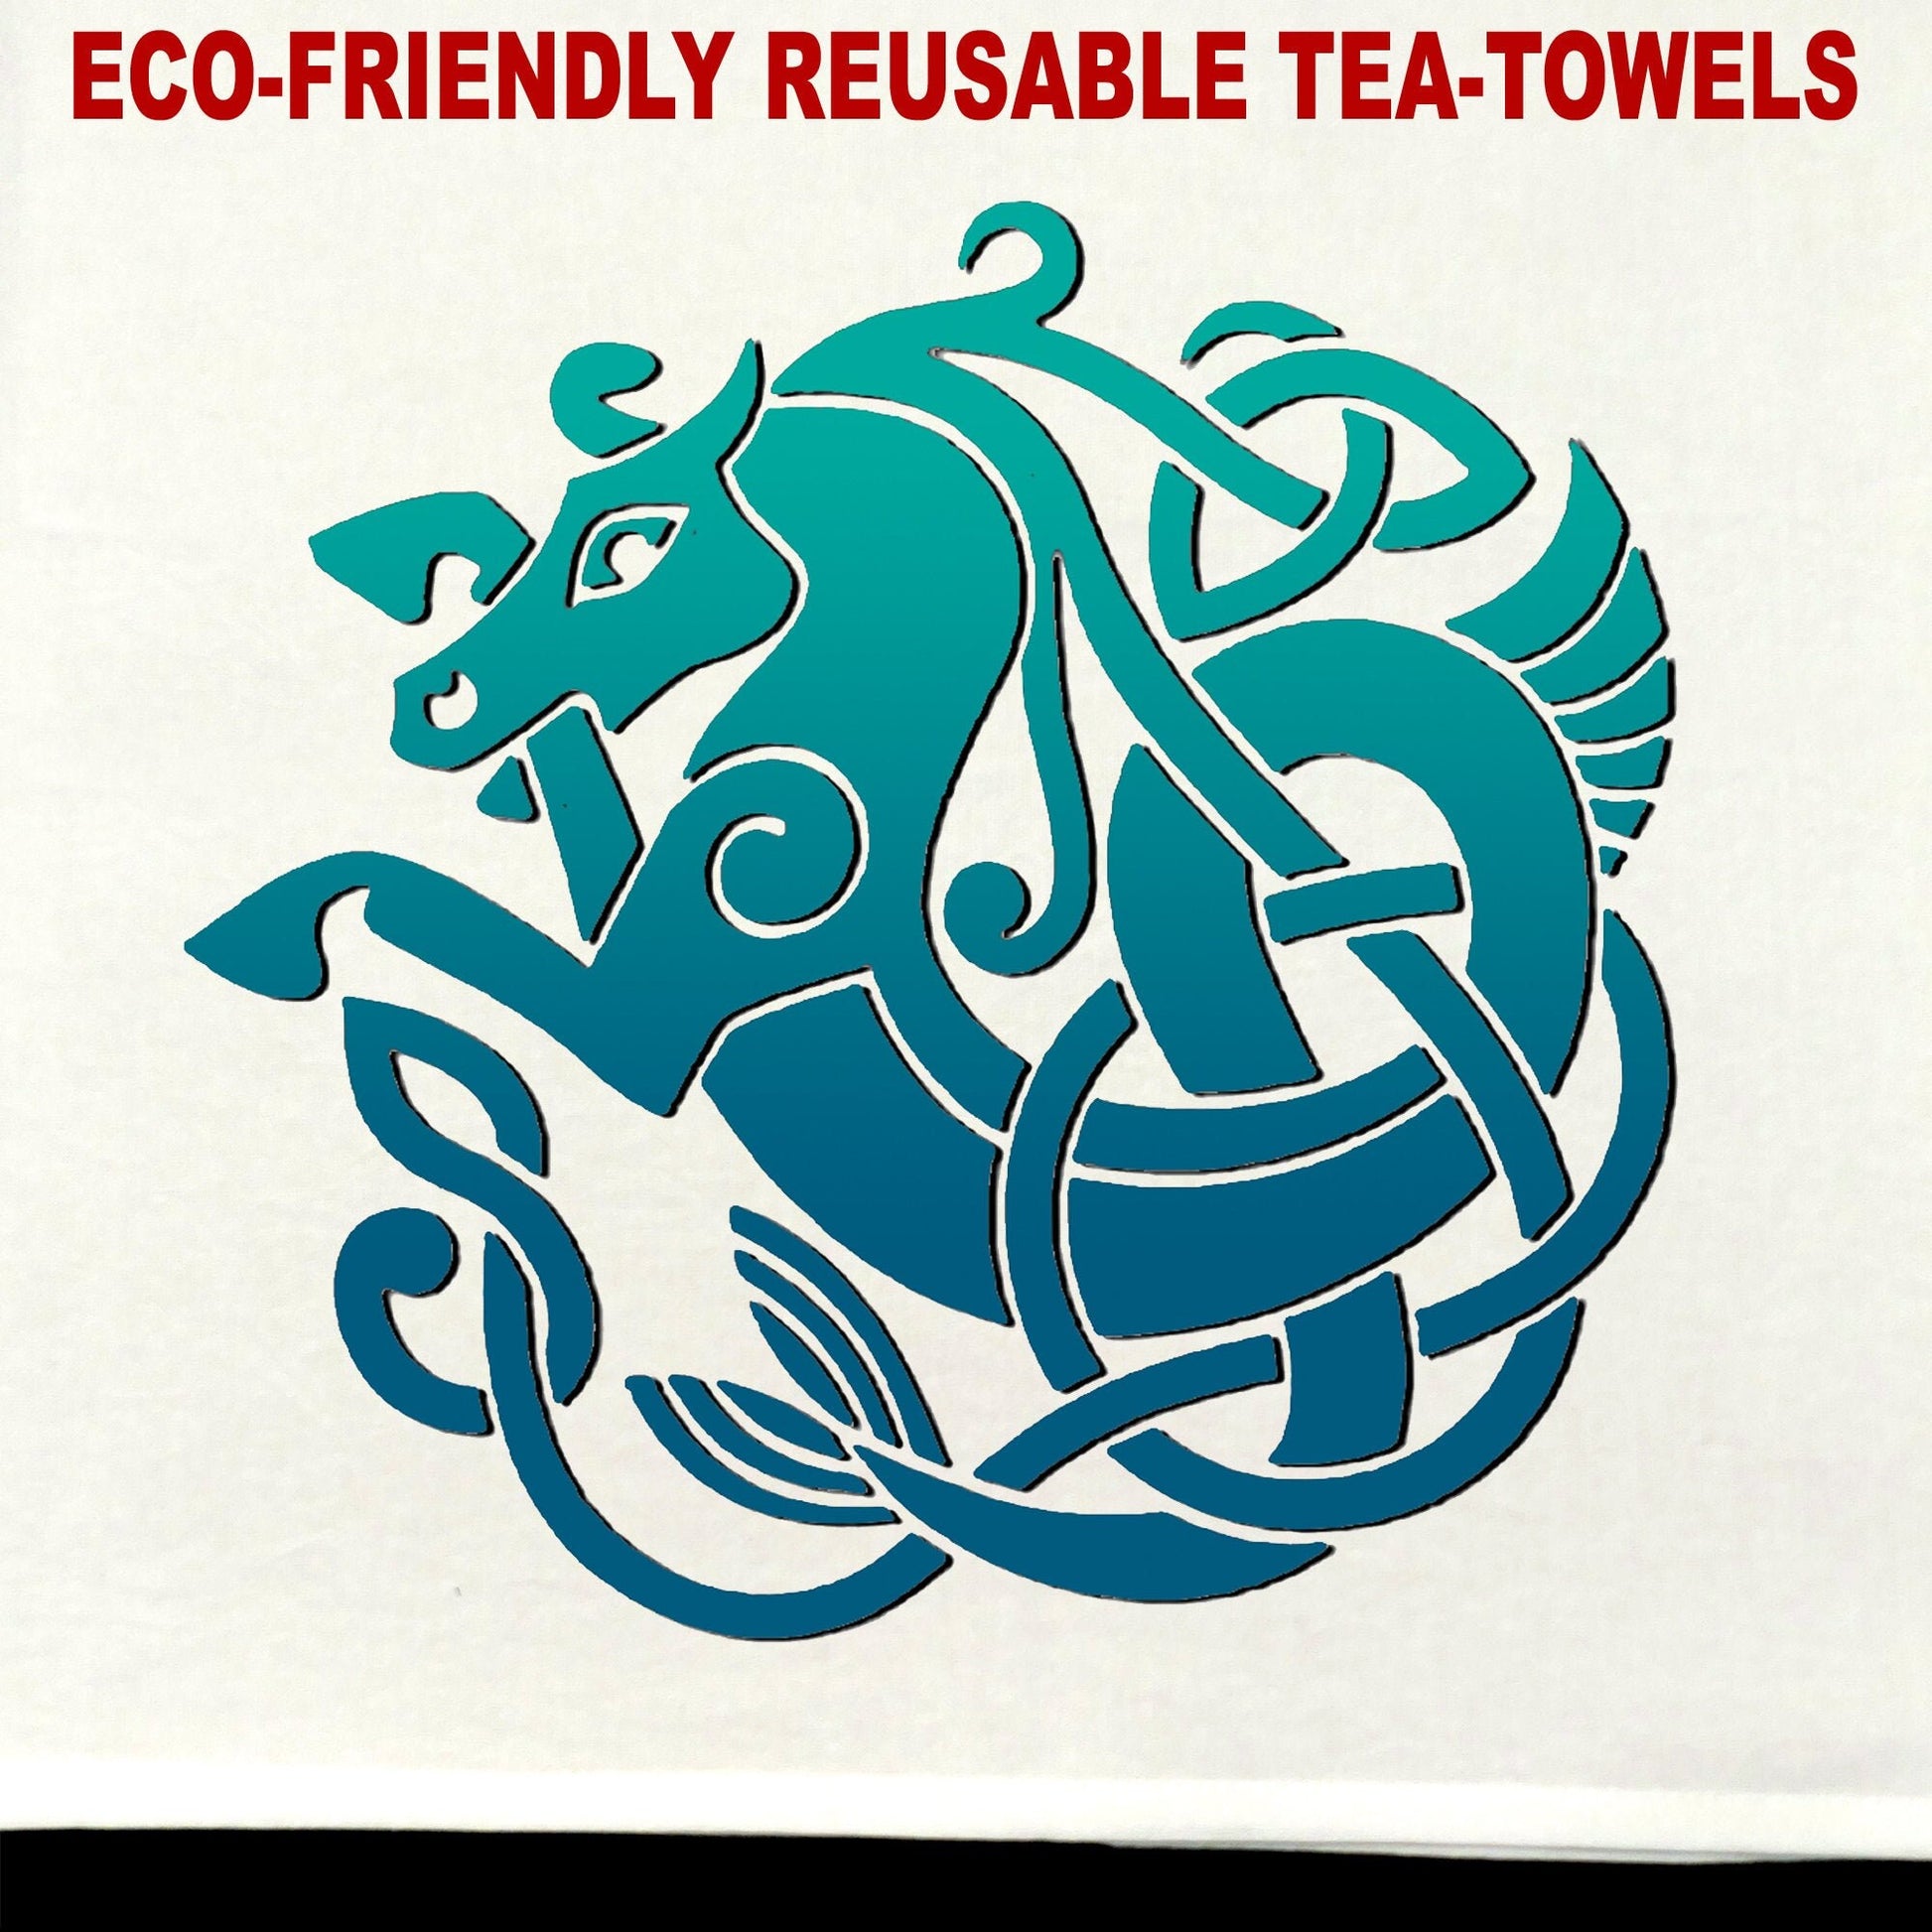 Seahorse Tea Towel / tea towel / dish towel / hand towel / reusable wipe / kitchen gift / kitchen deco